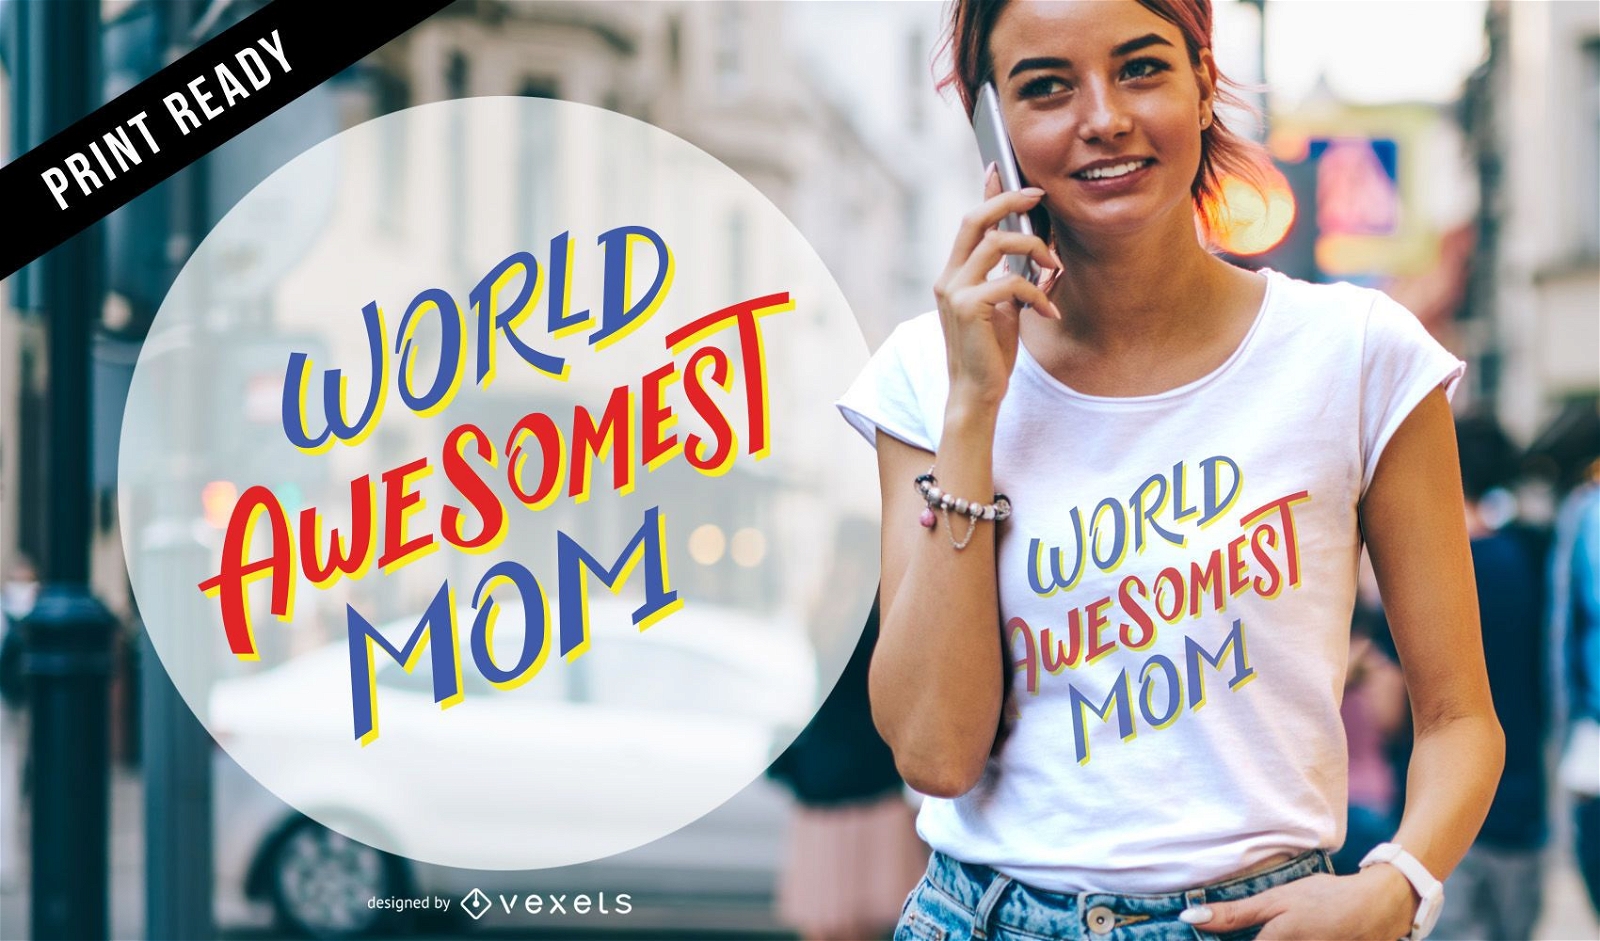 World awesomest mom t-shirt design